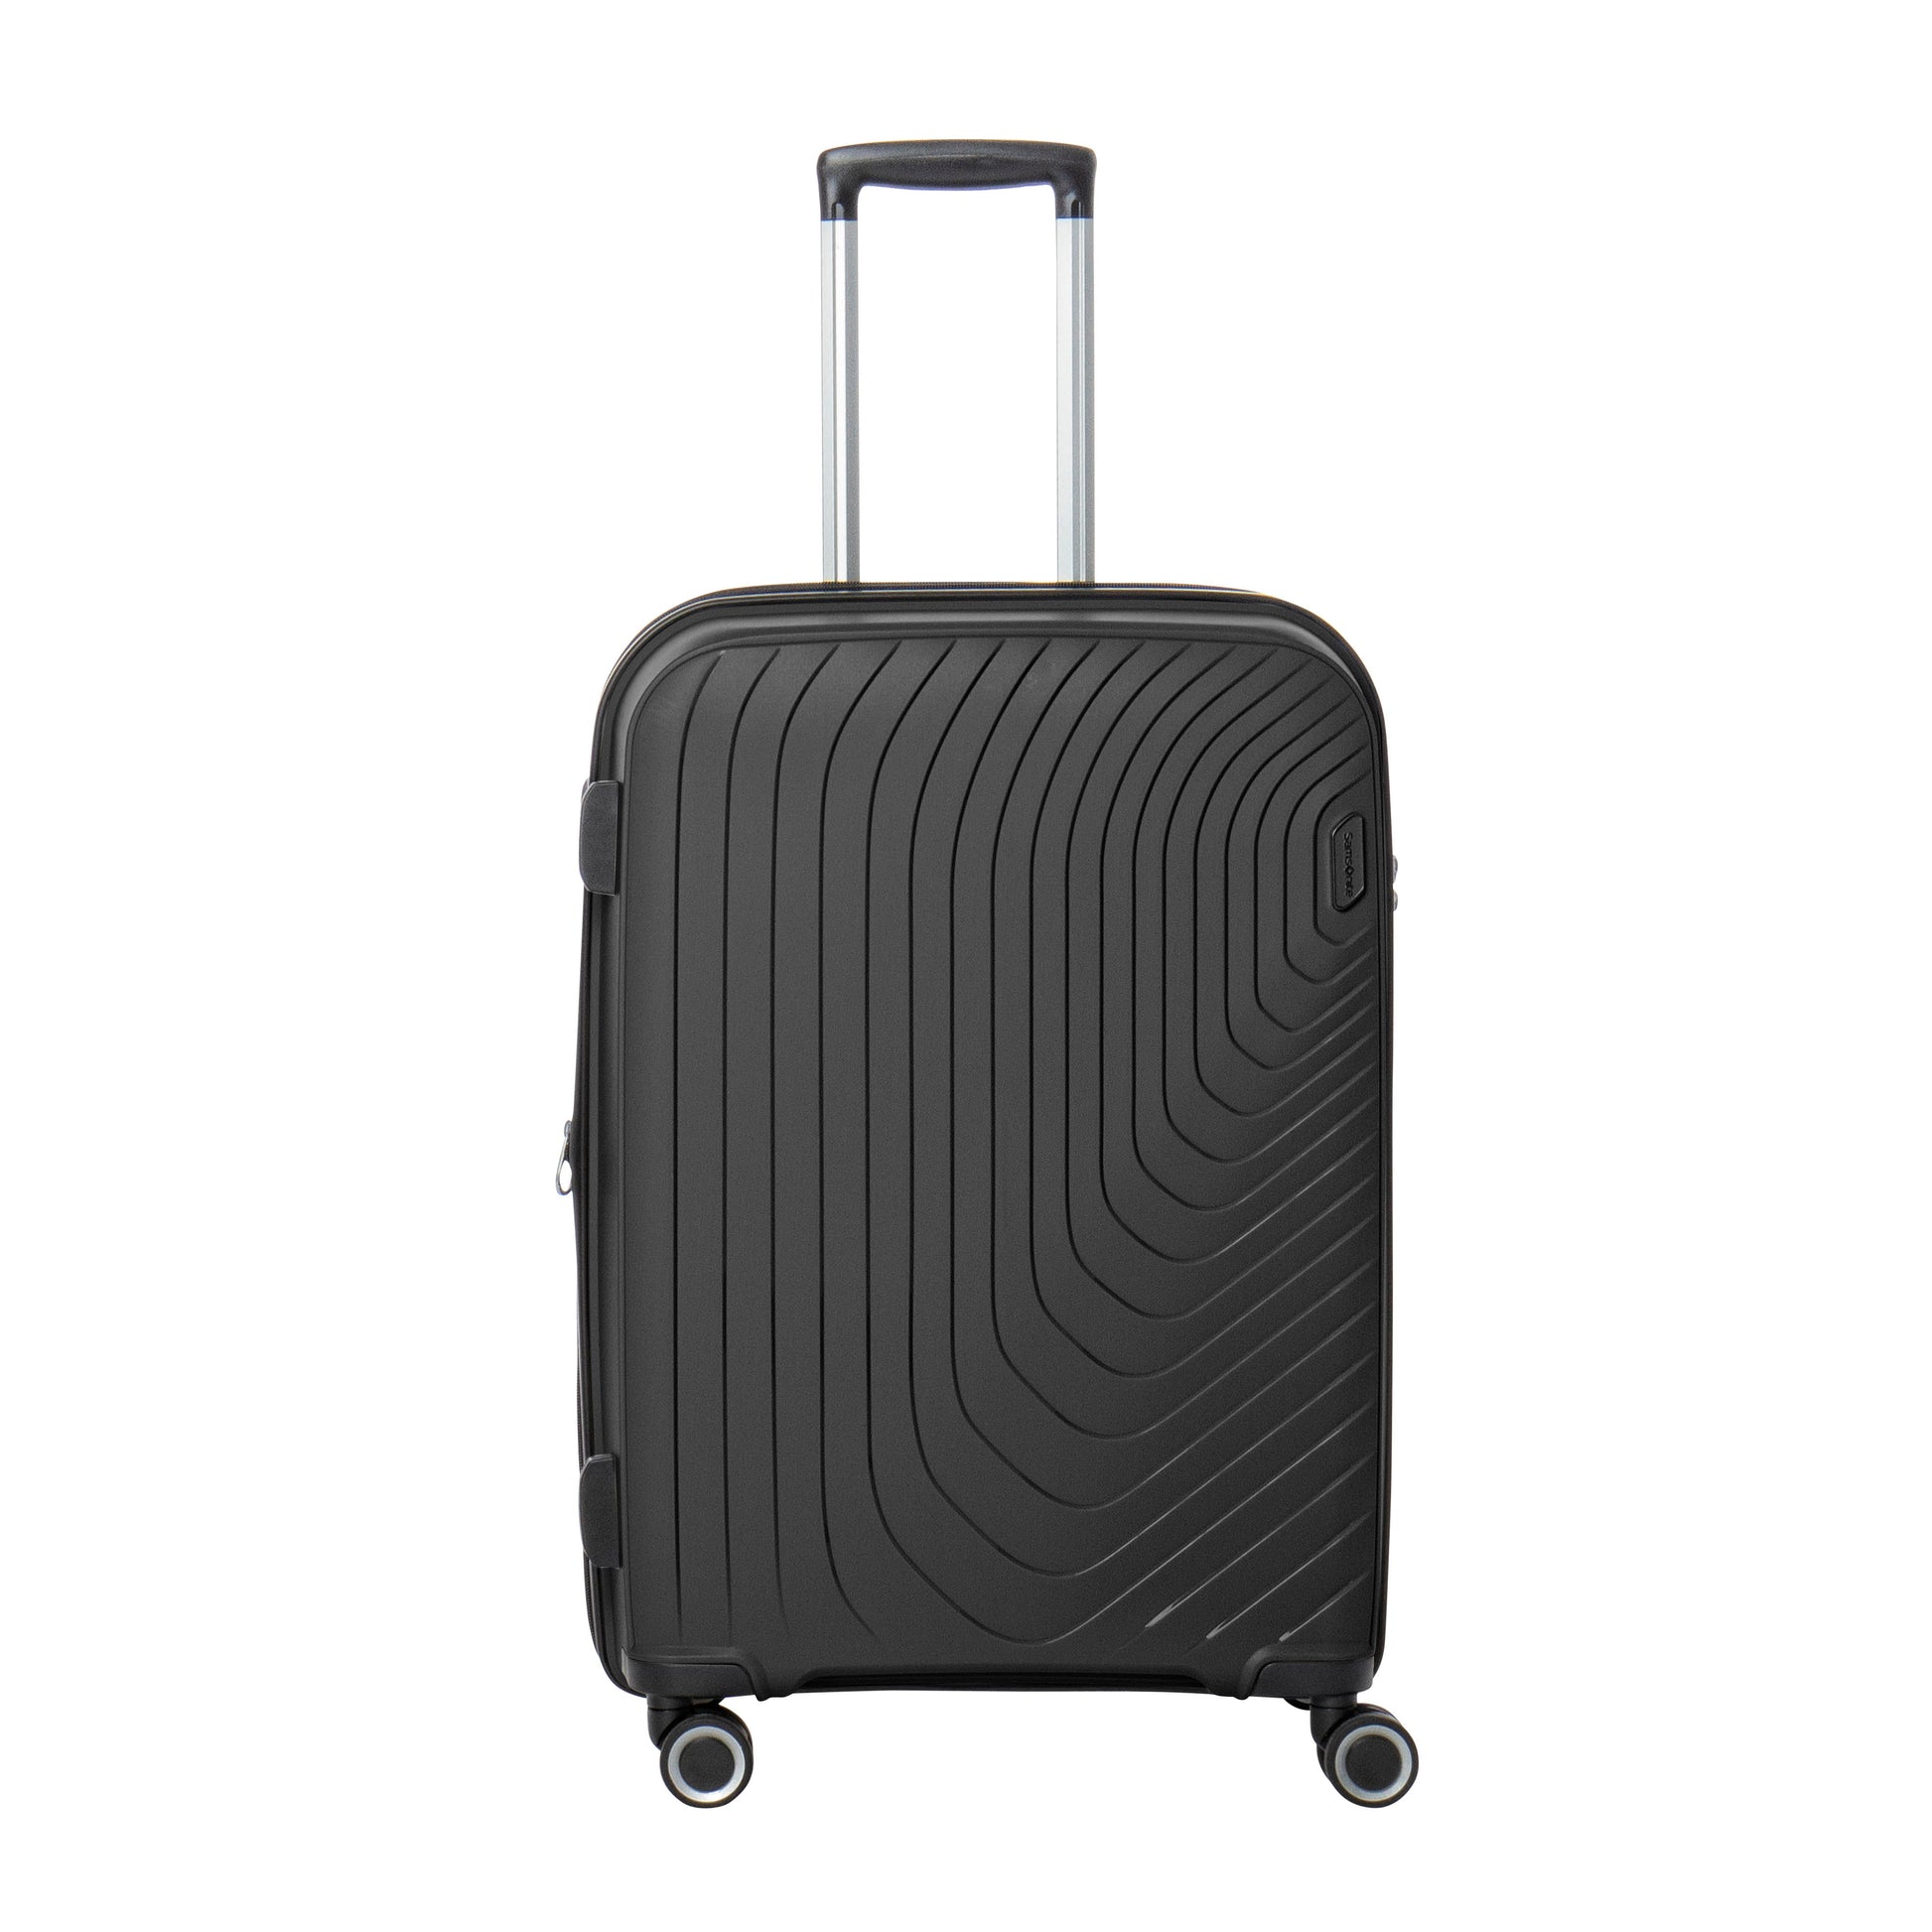 Samsonite Arrival NXT Spinner Medium Luggage